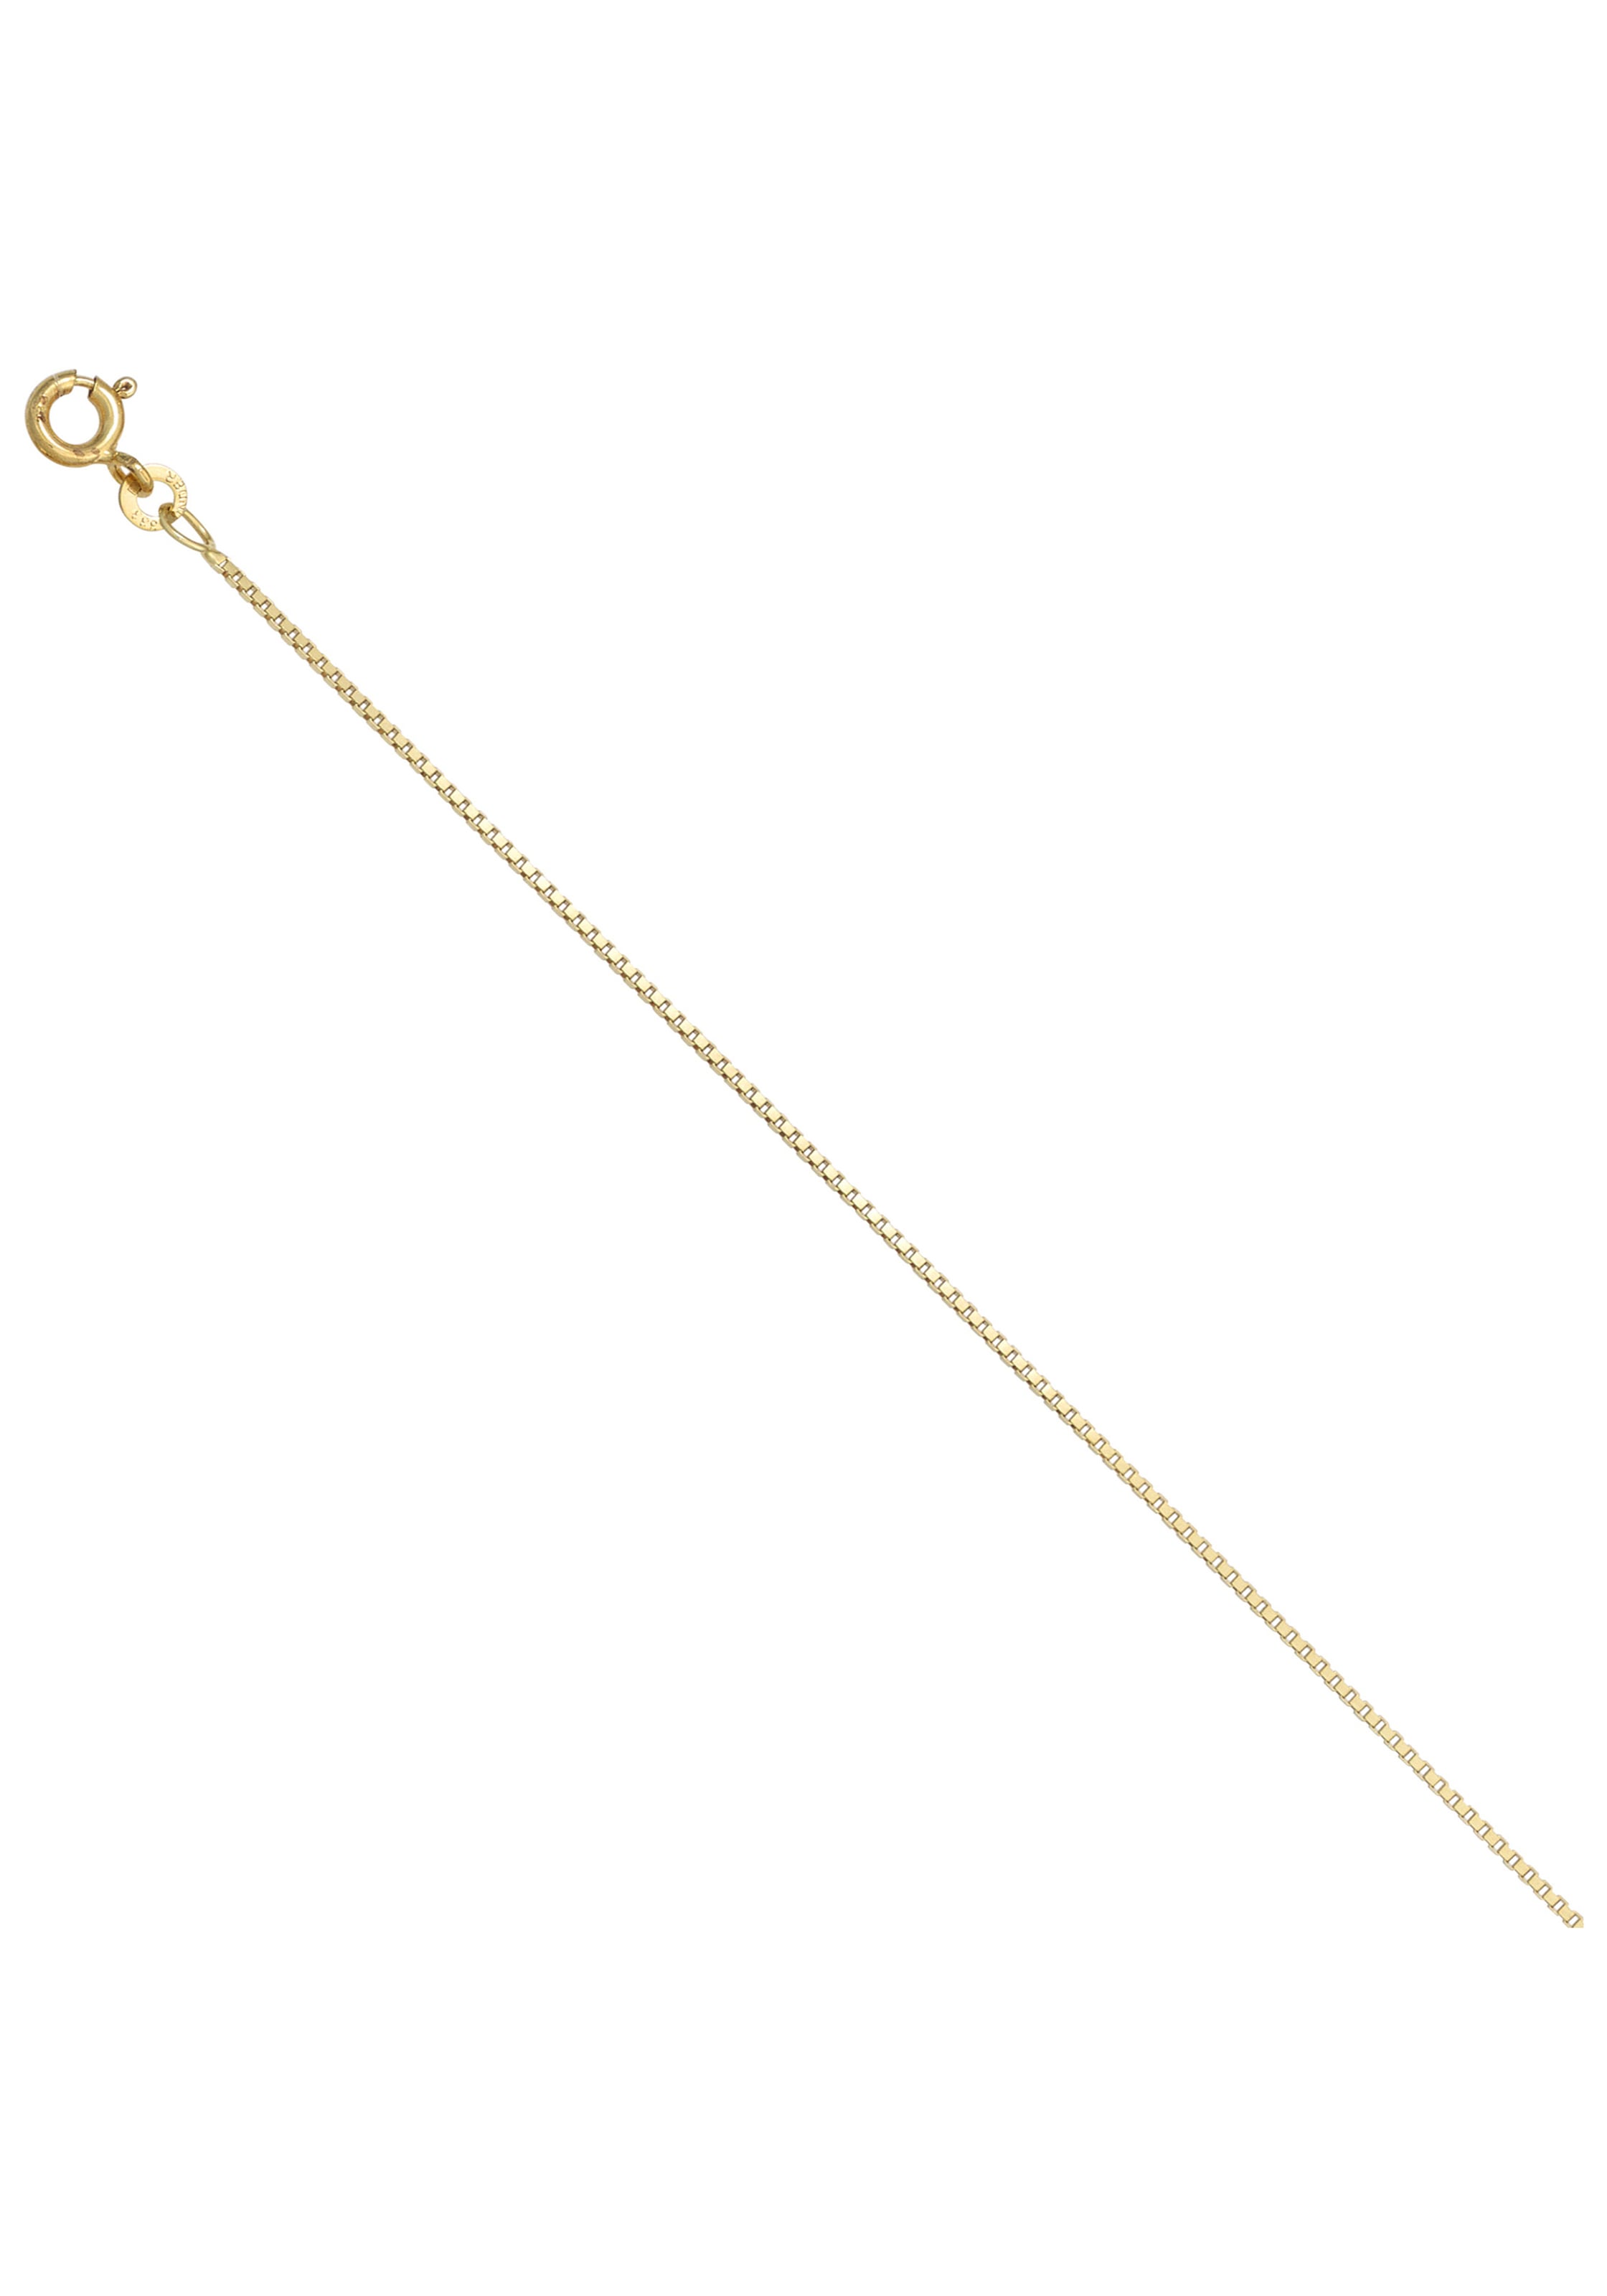 JOBO Goldkette, Venezianerkette 585 Gold 50 cm 1,0 mm